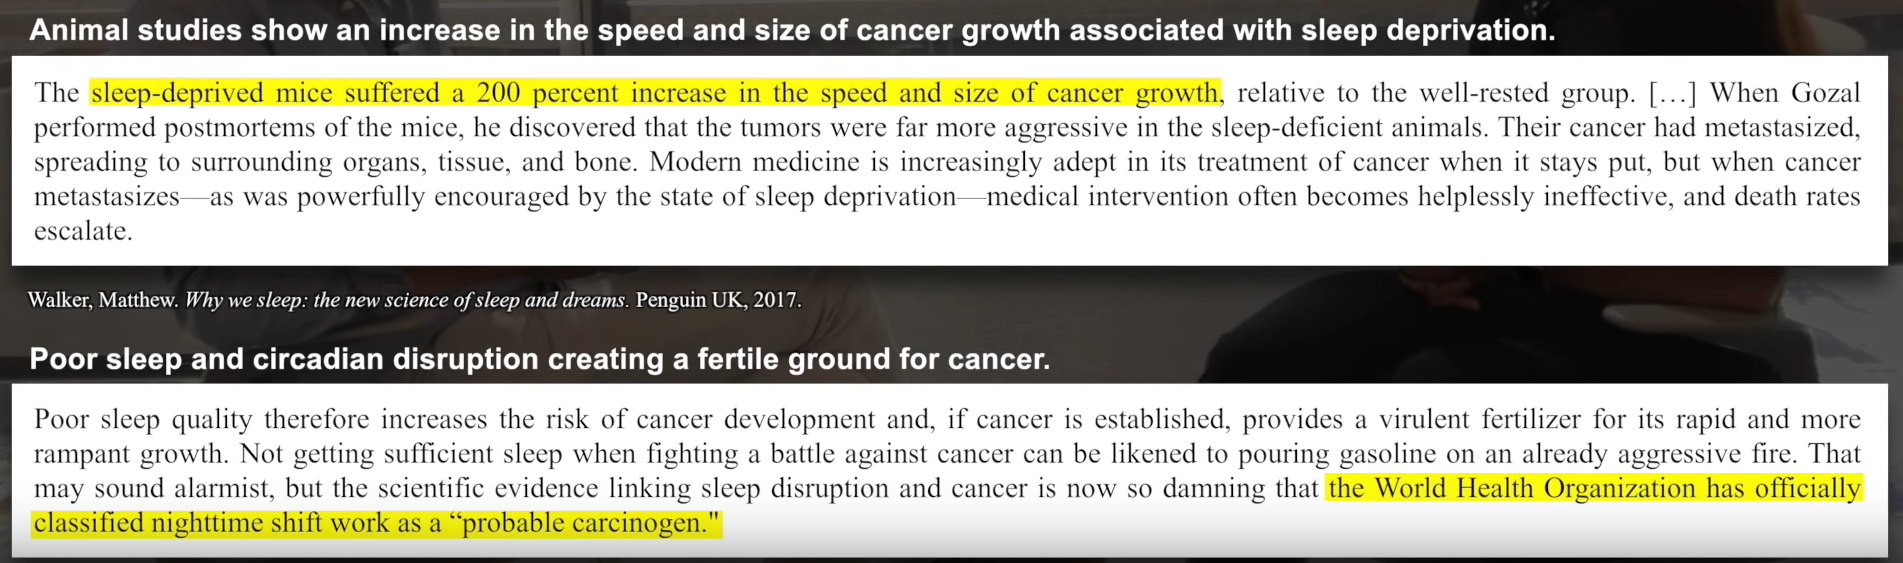 cancer growth animal studies